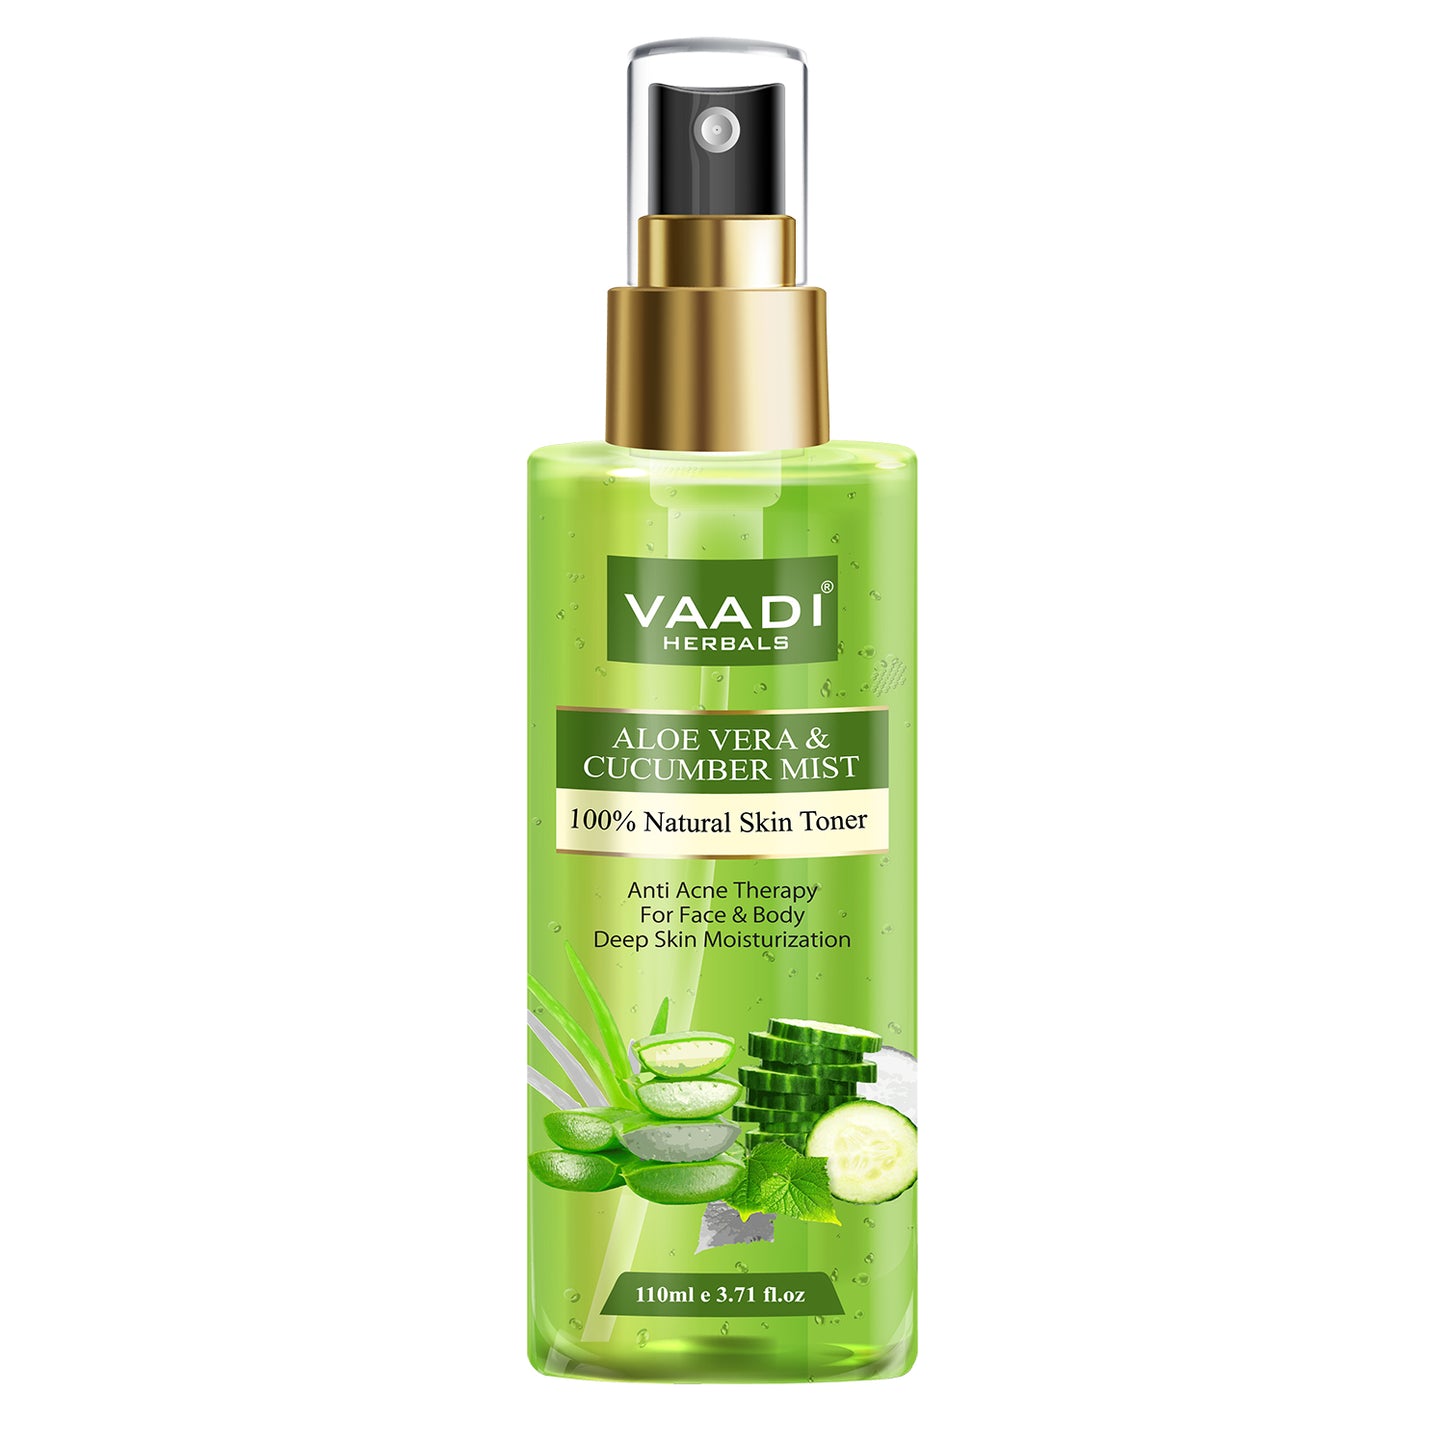 Aloe Vera & Cucumber Mist - 100% Natural Skin Toner (110 ml / 4 fl oz)